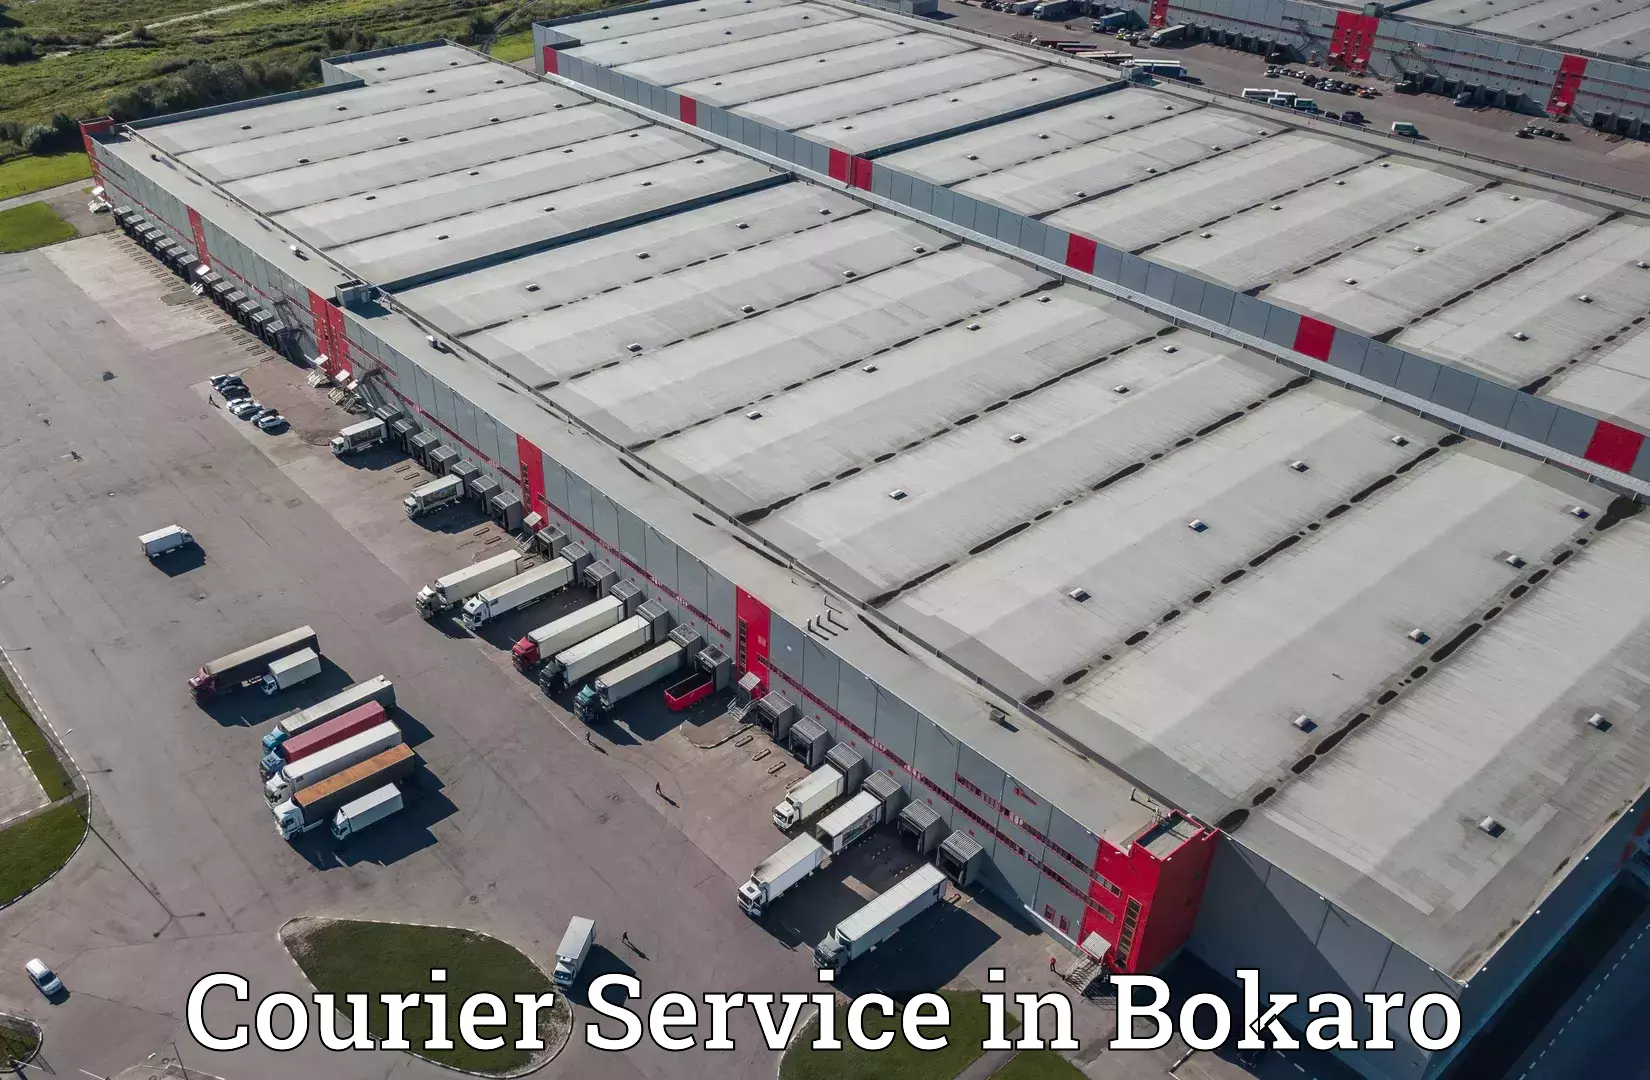 Courier service innovation in Bokaro